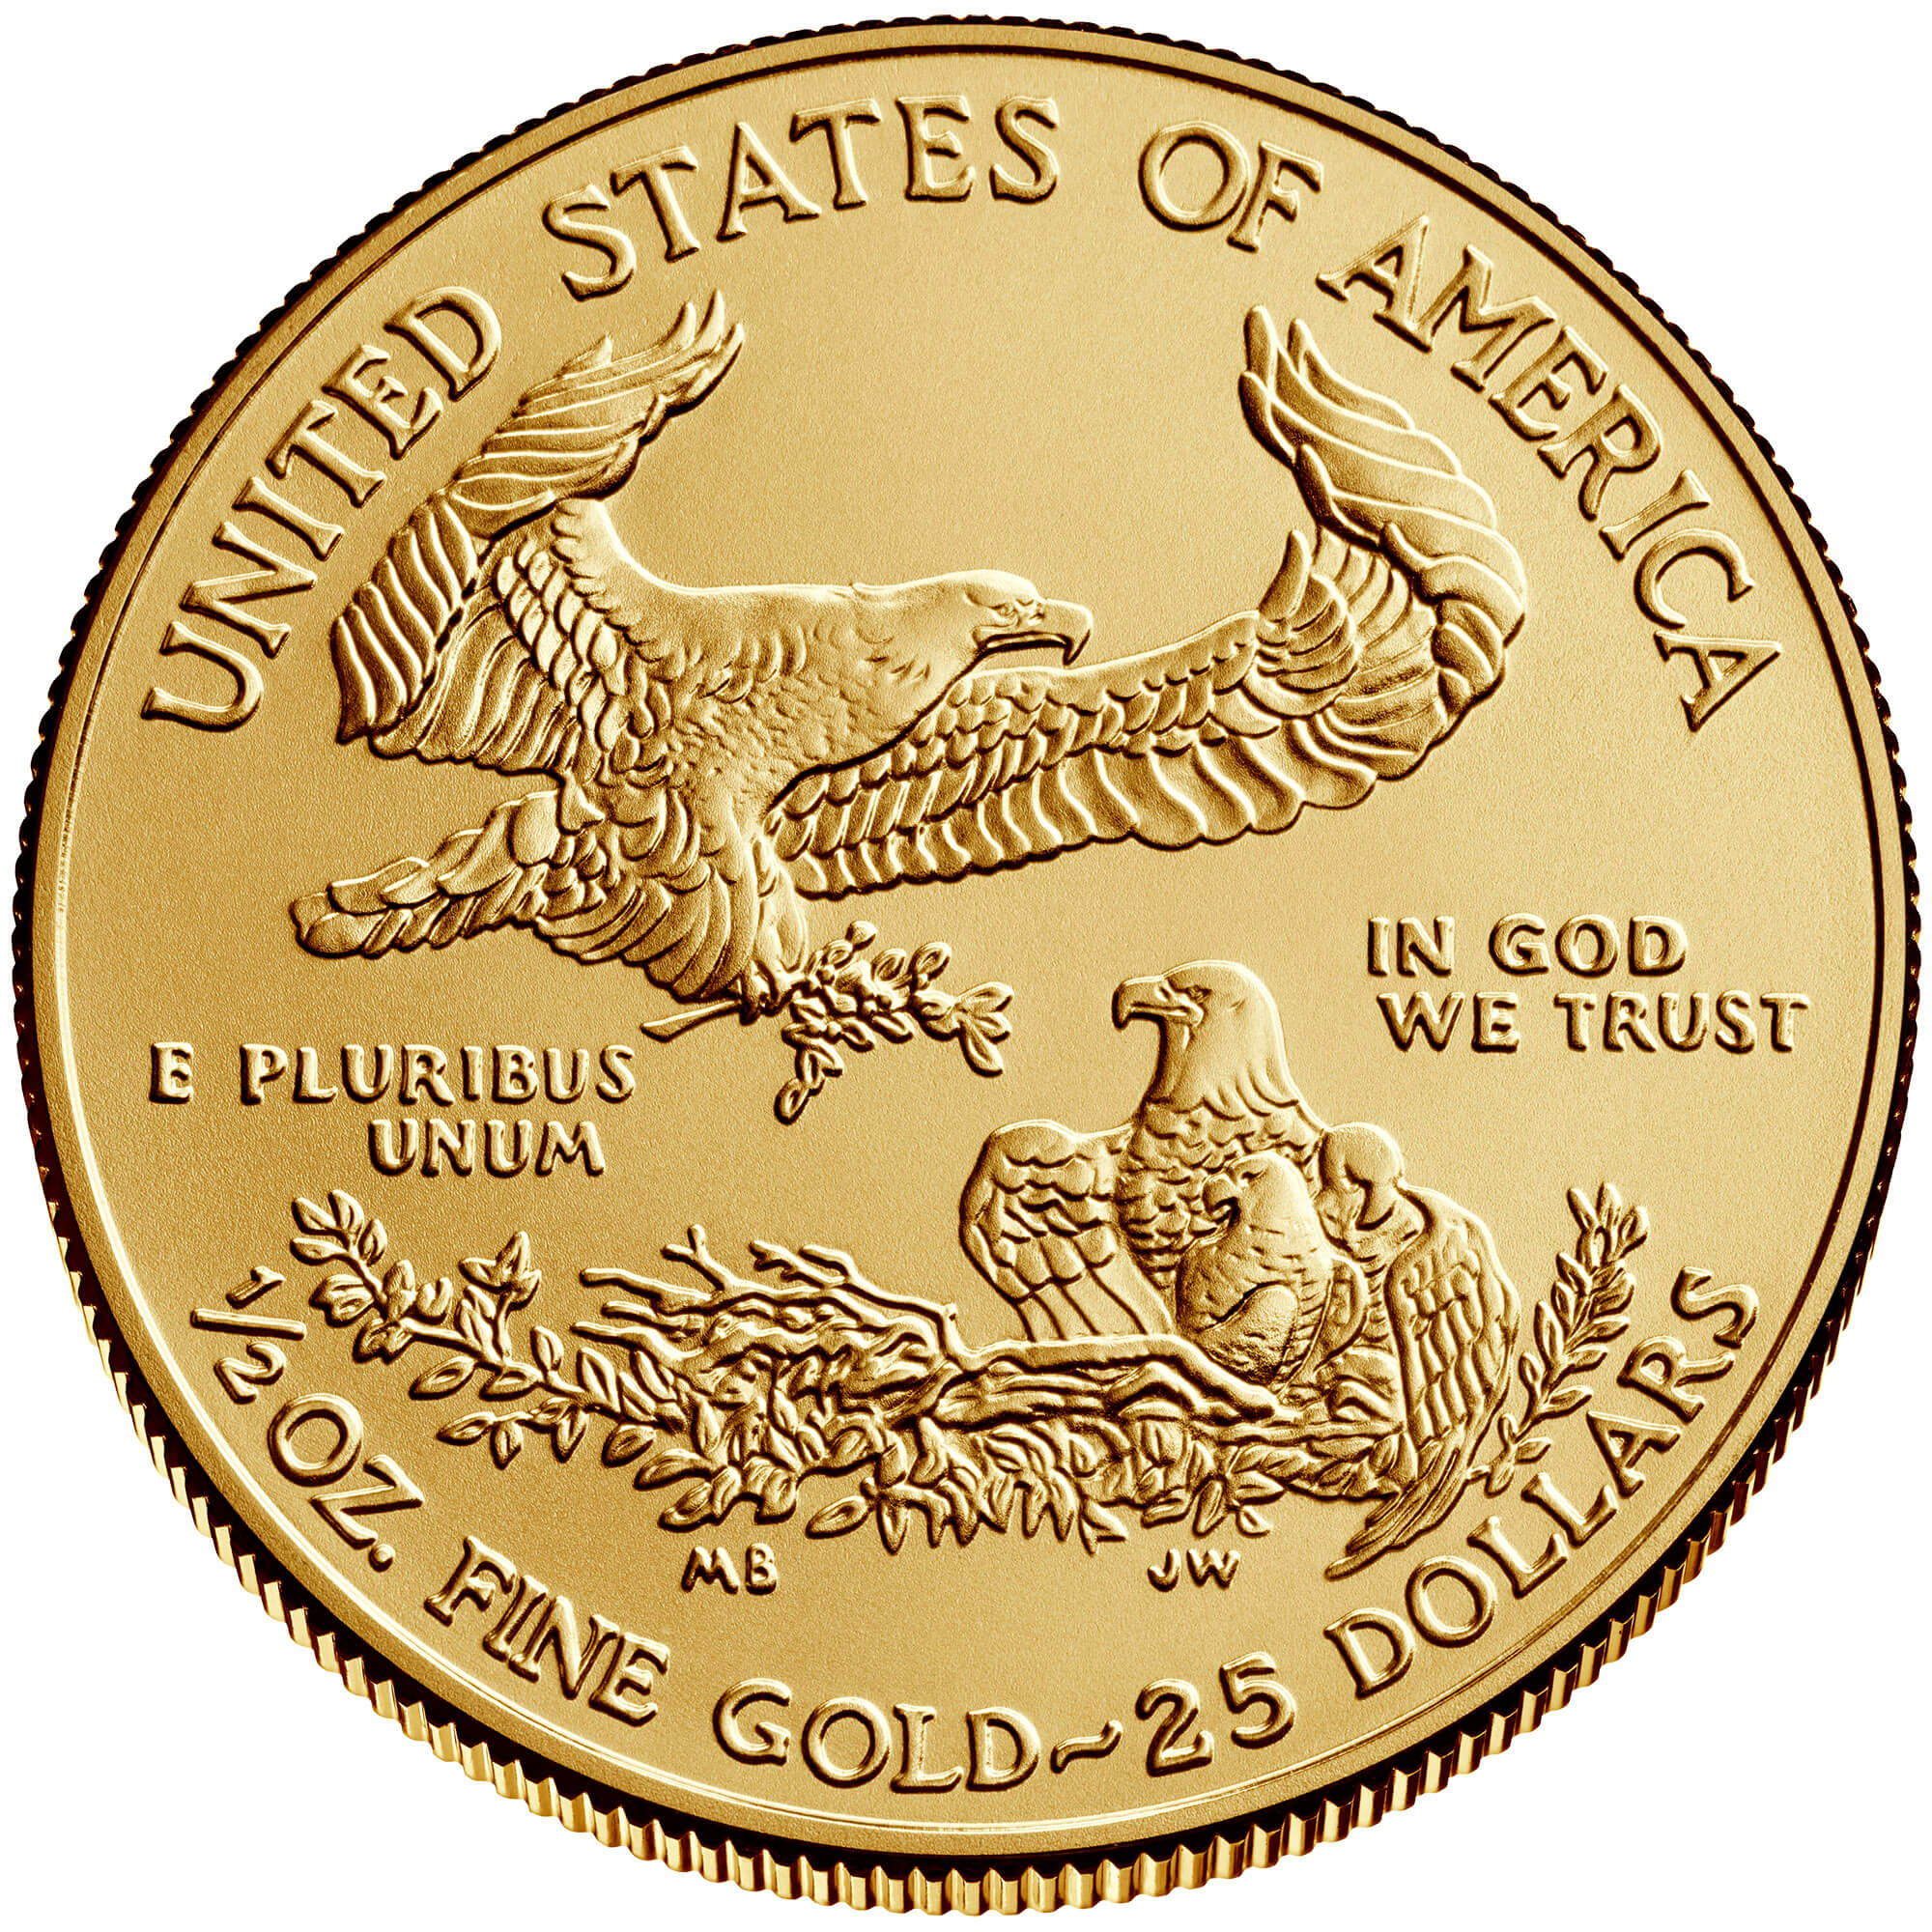 US 25 Dollars 2005 no mintmark